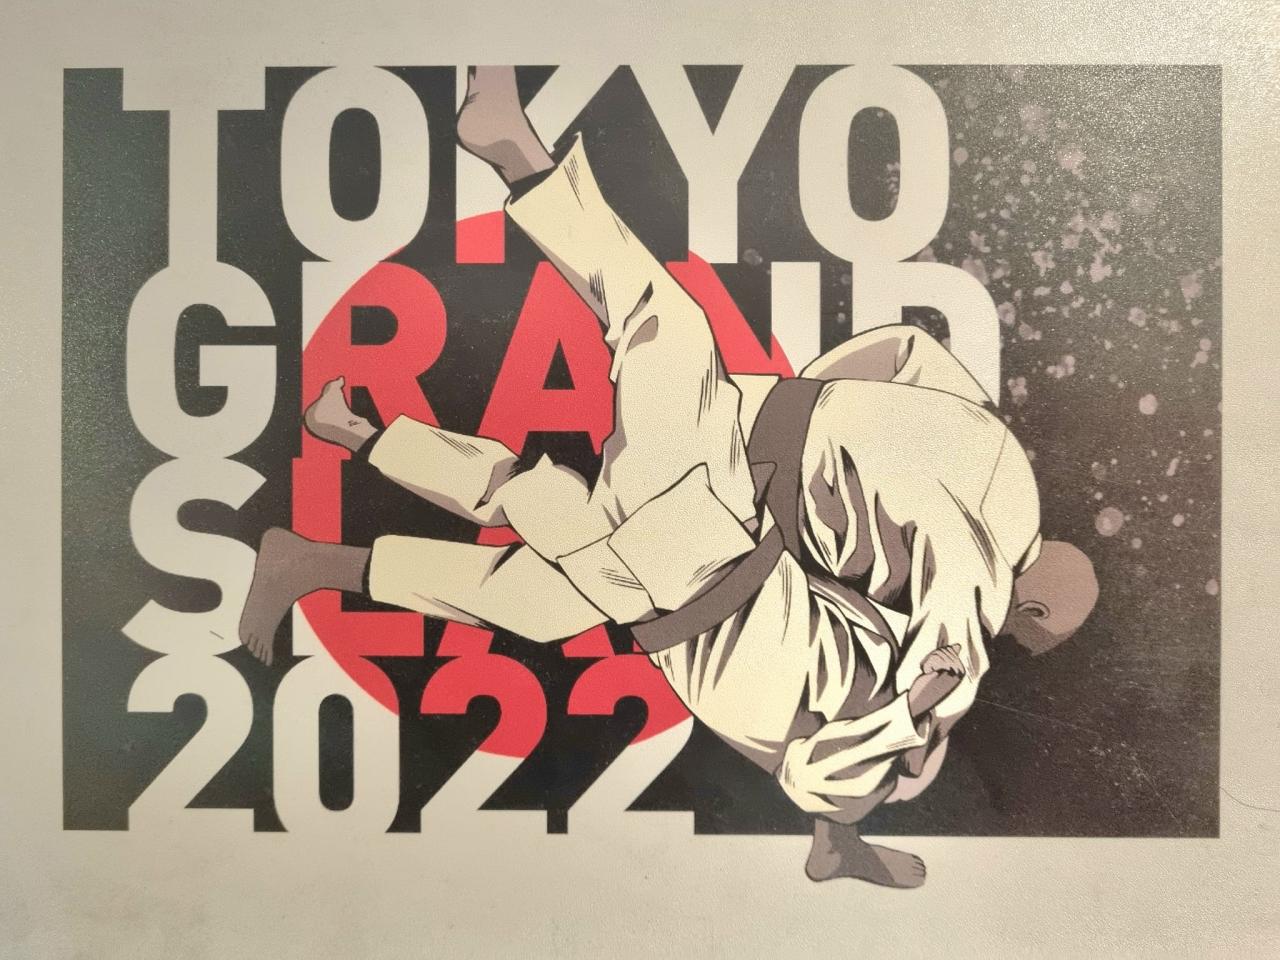 images/large/2022_Tokyo_Grand_Slam.jpg